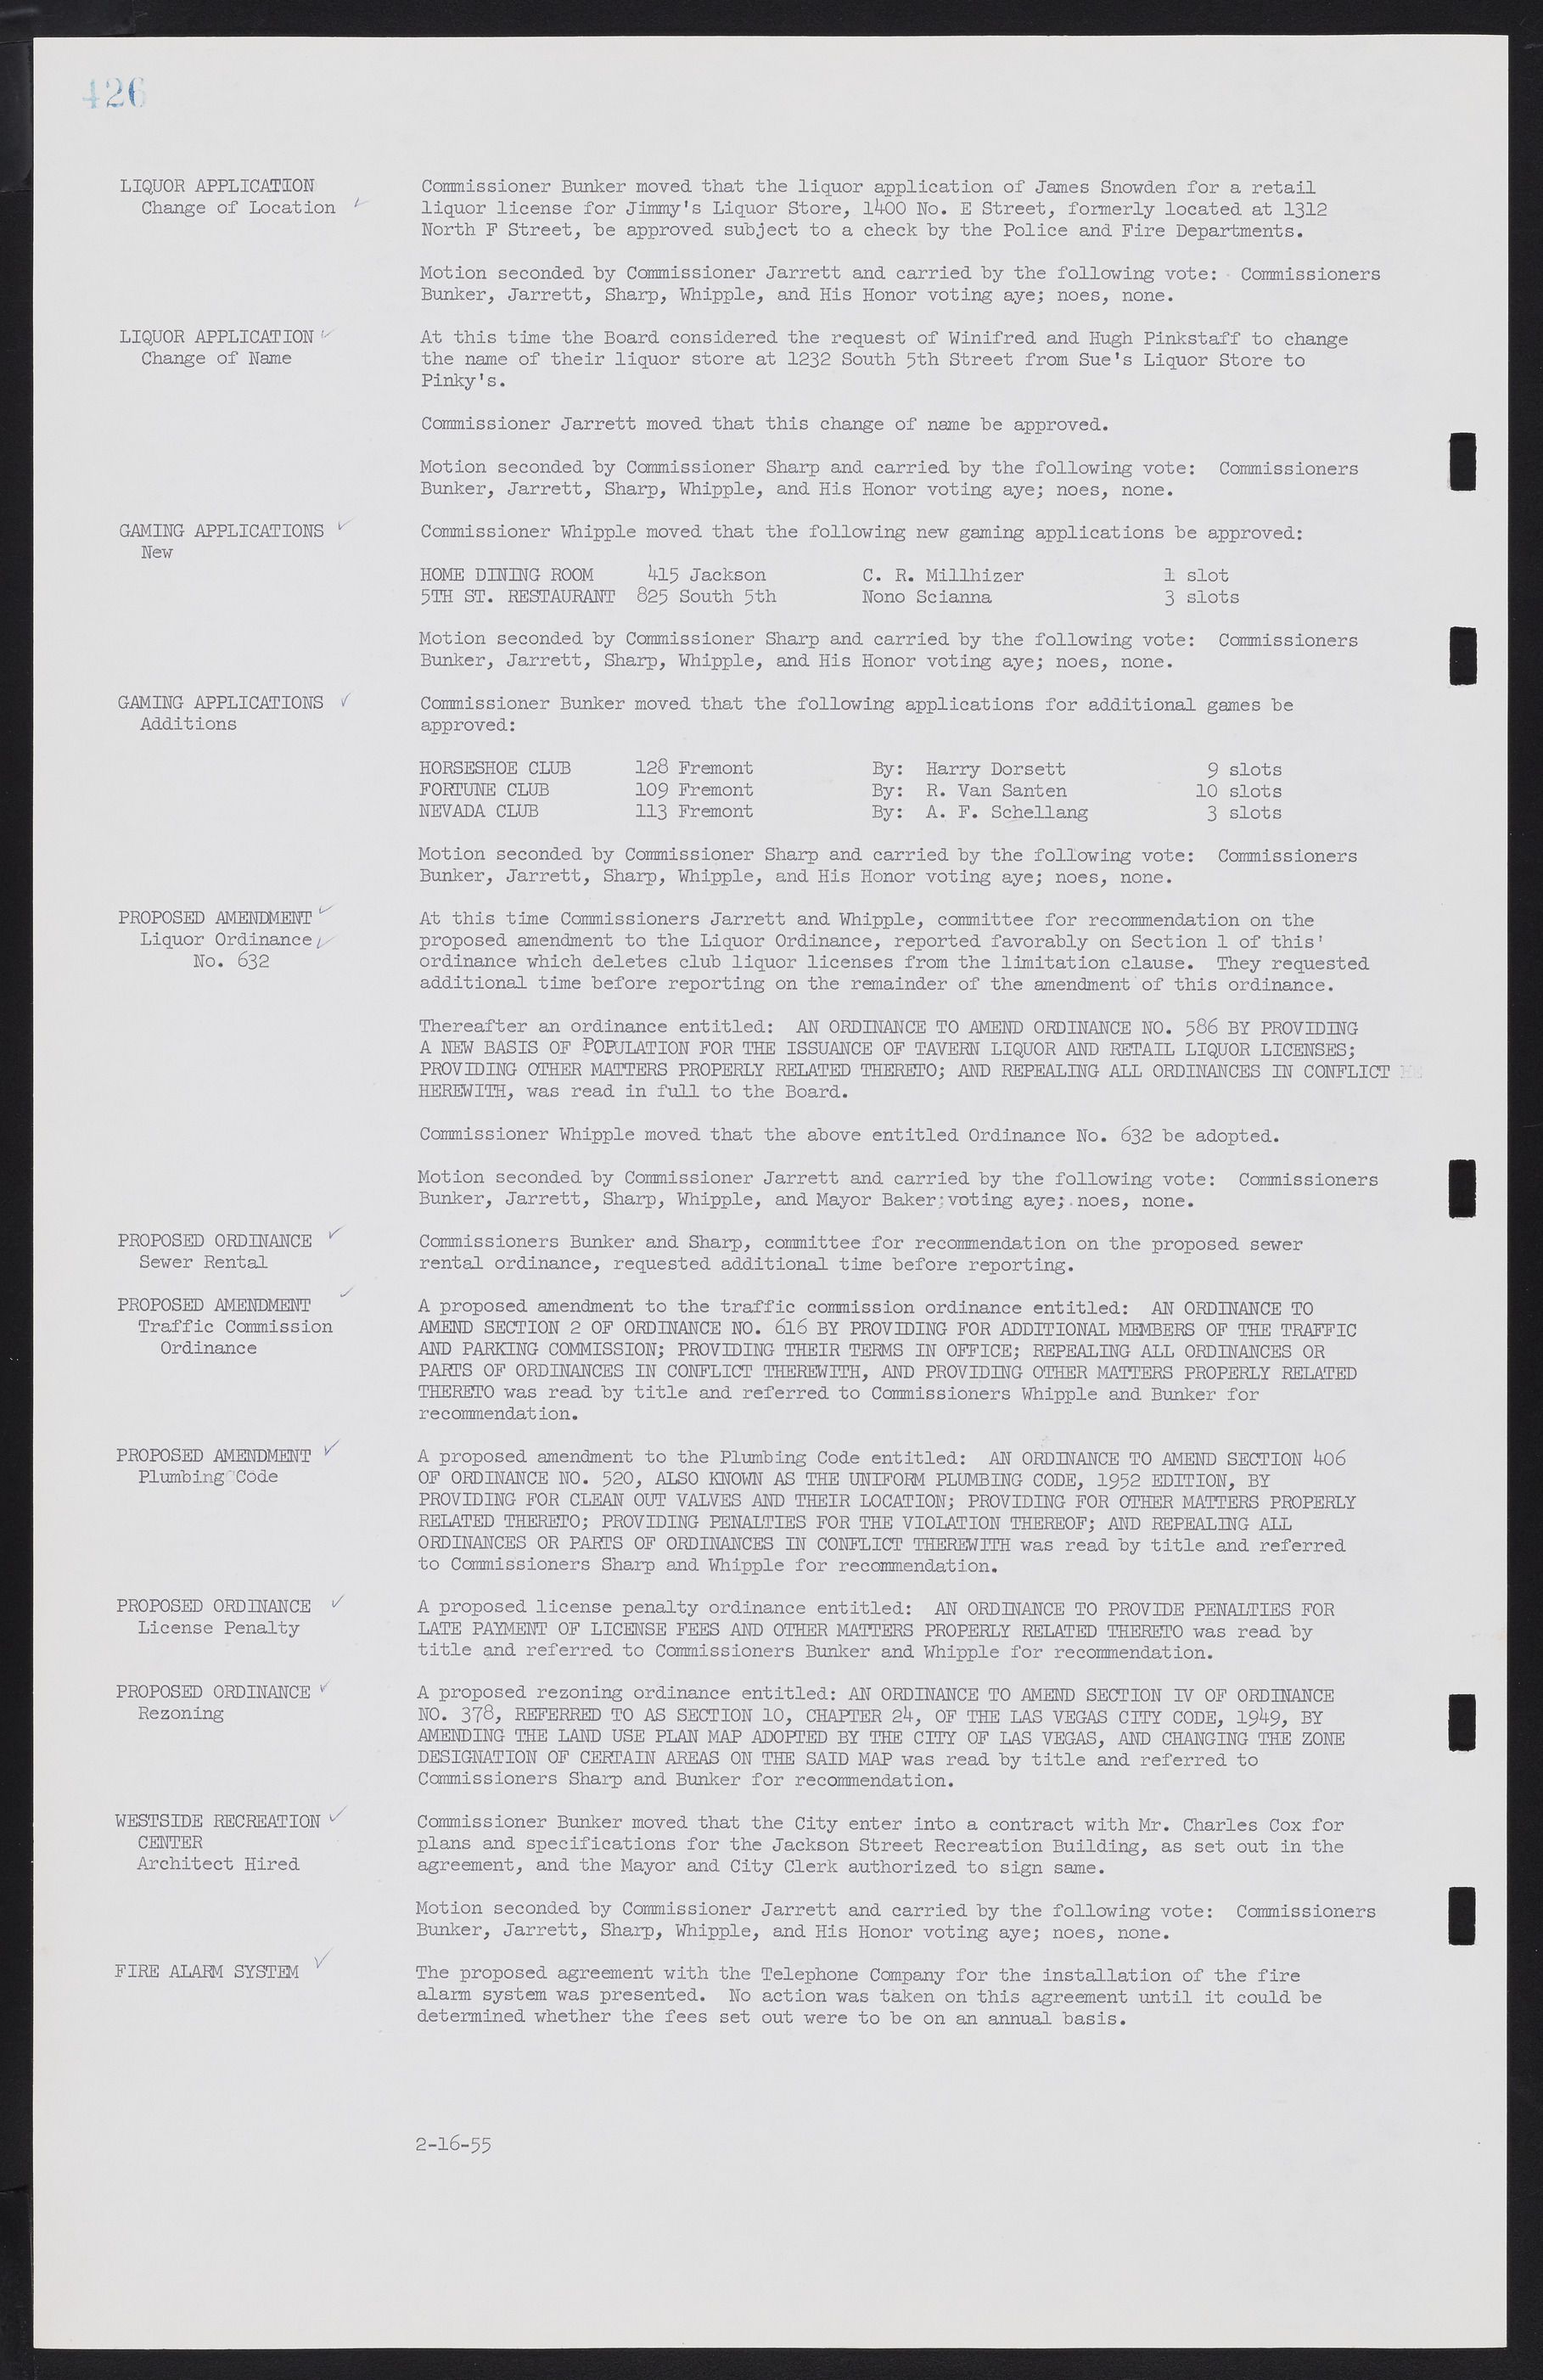 Las Vegas City Commission Minutes, February 17, 1954 to September 21, 1955, lvc000009-432